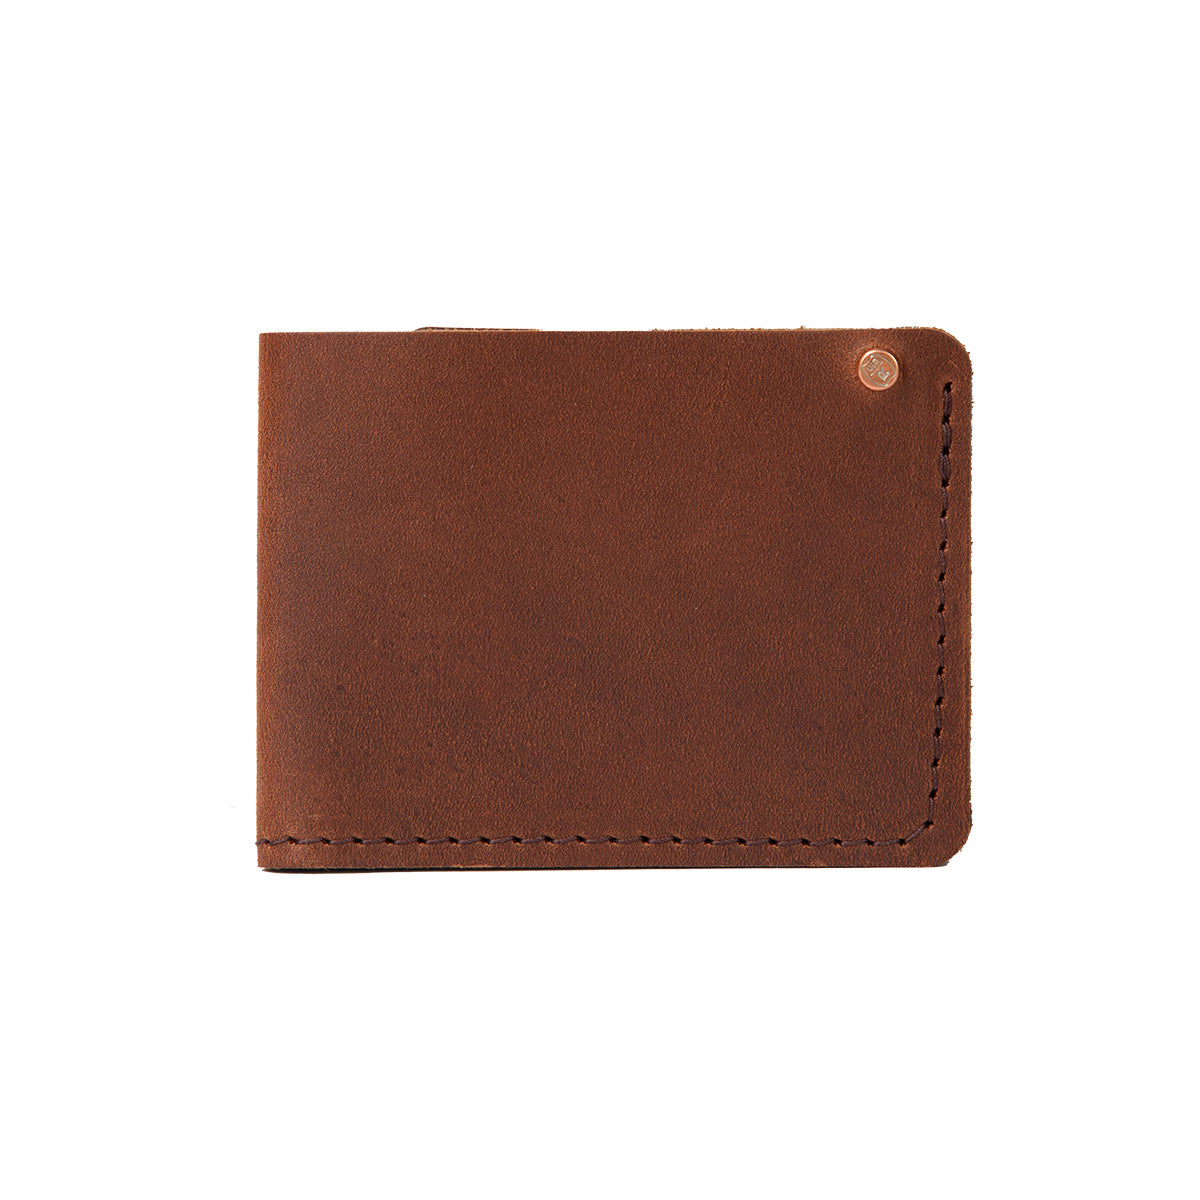 Wholesale New stock Epi leather slim man wallet Retail wallet men